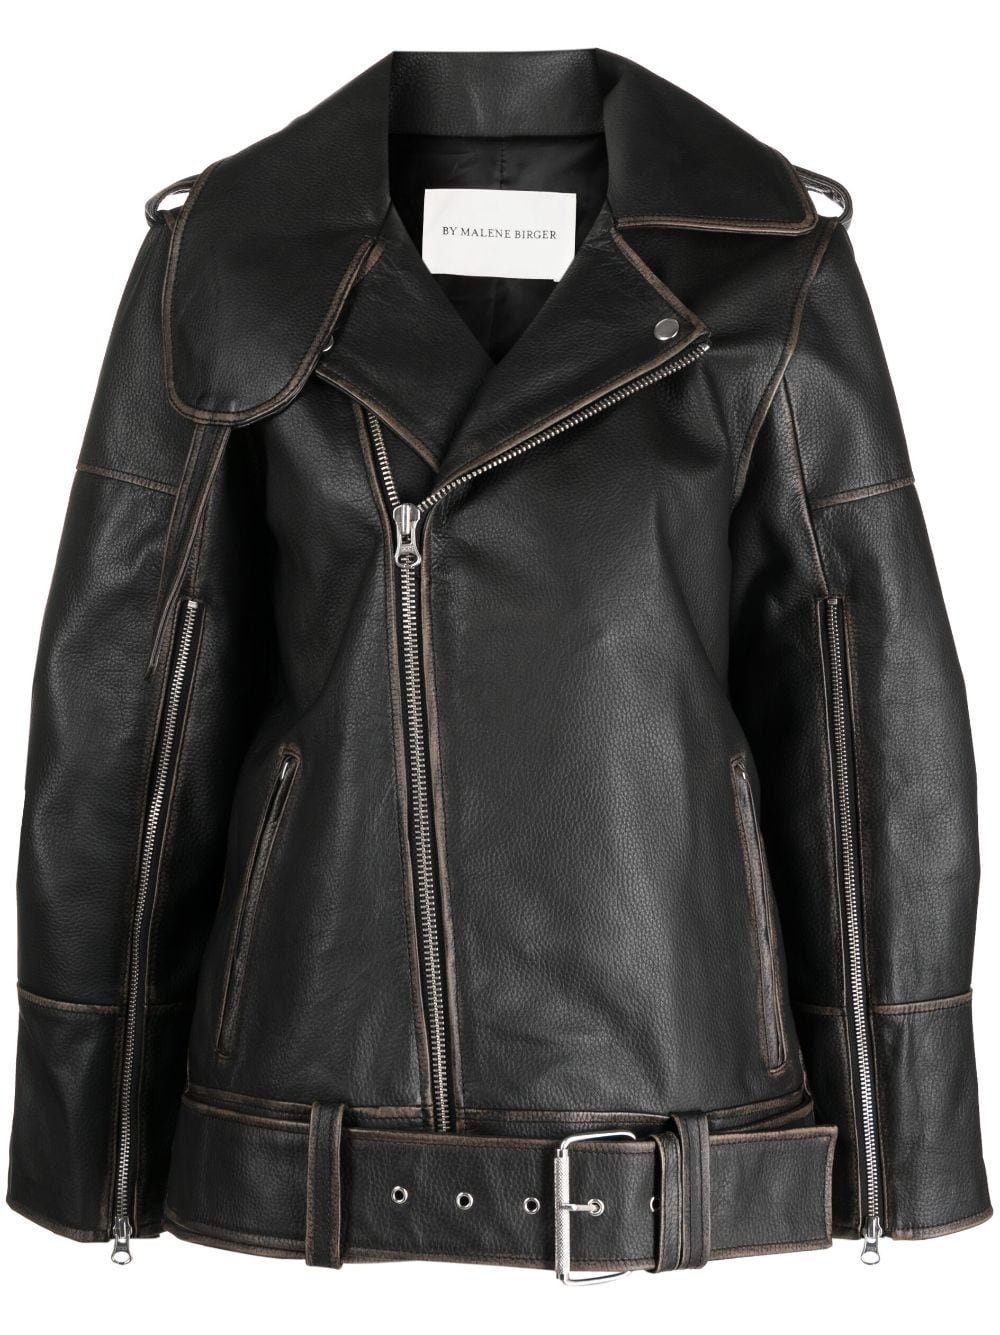 By Malene Birger zip details leather jacket – Black